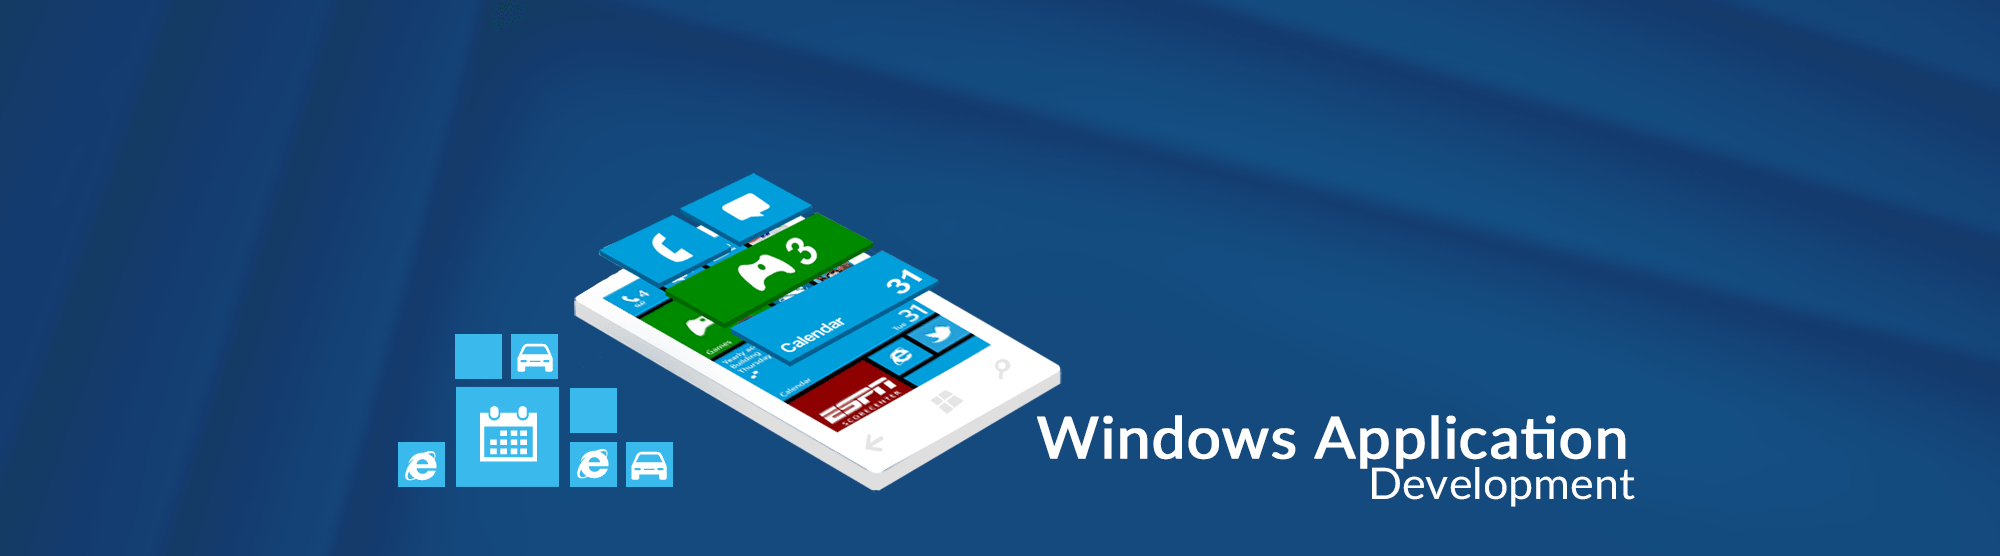 Windows mobile app development services.